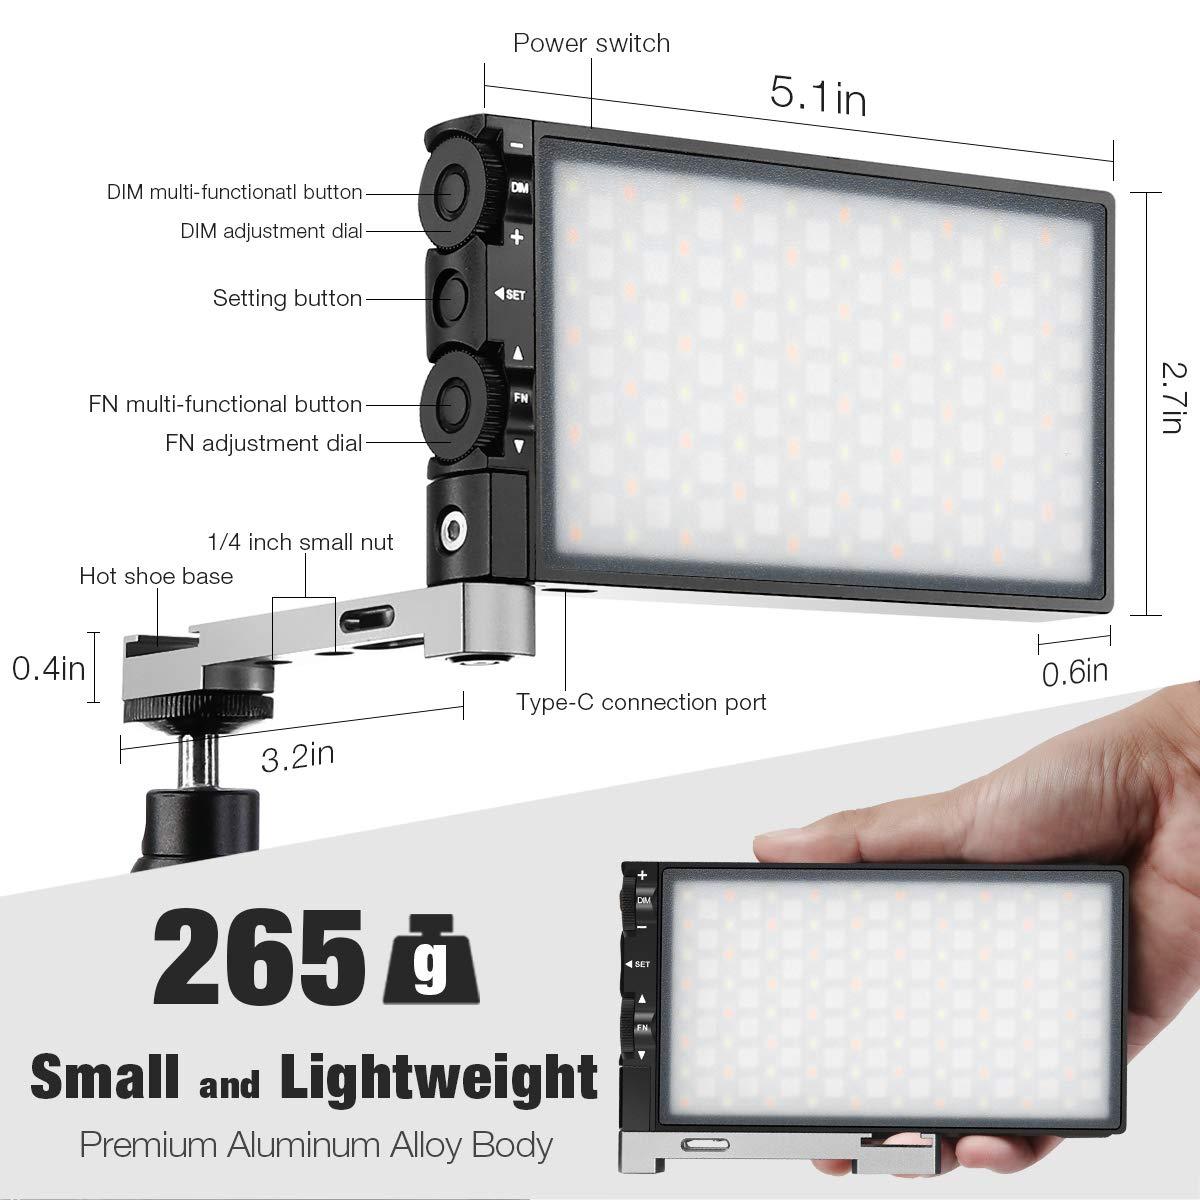 Full-color RGB Fill Light Pocket Light Portable LED - KENTFAITH